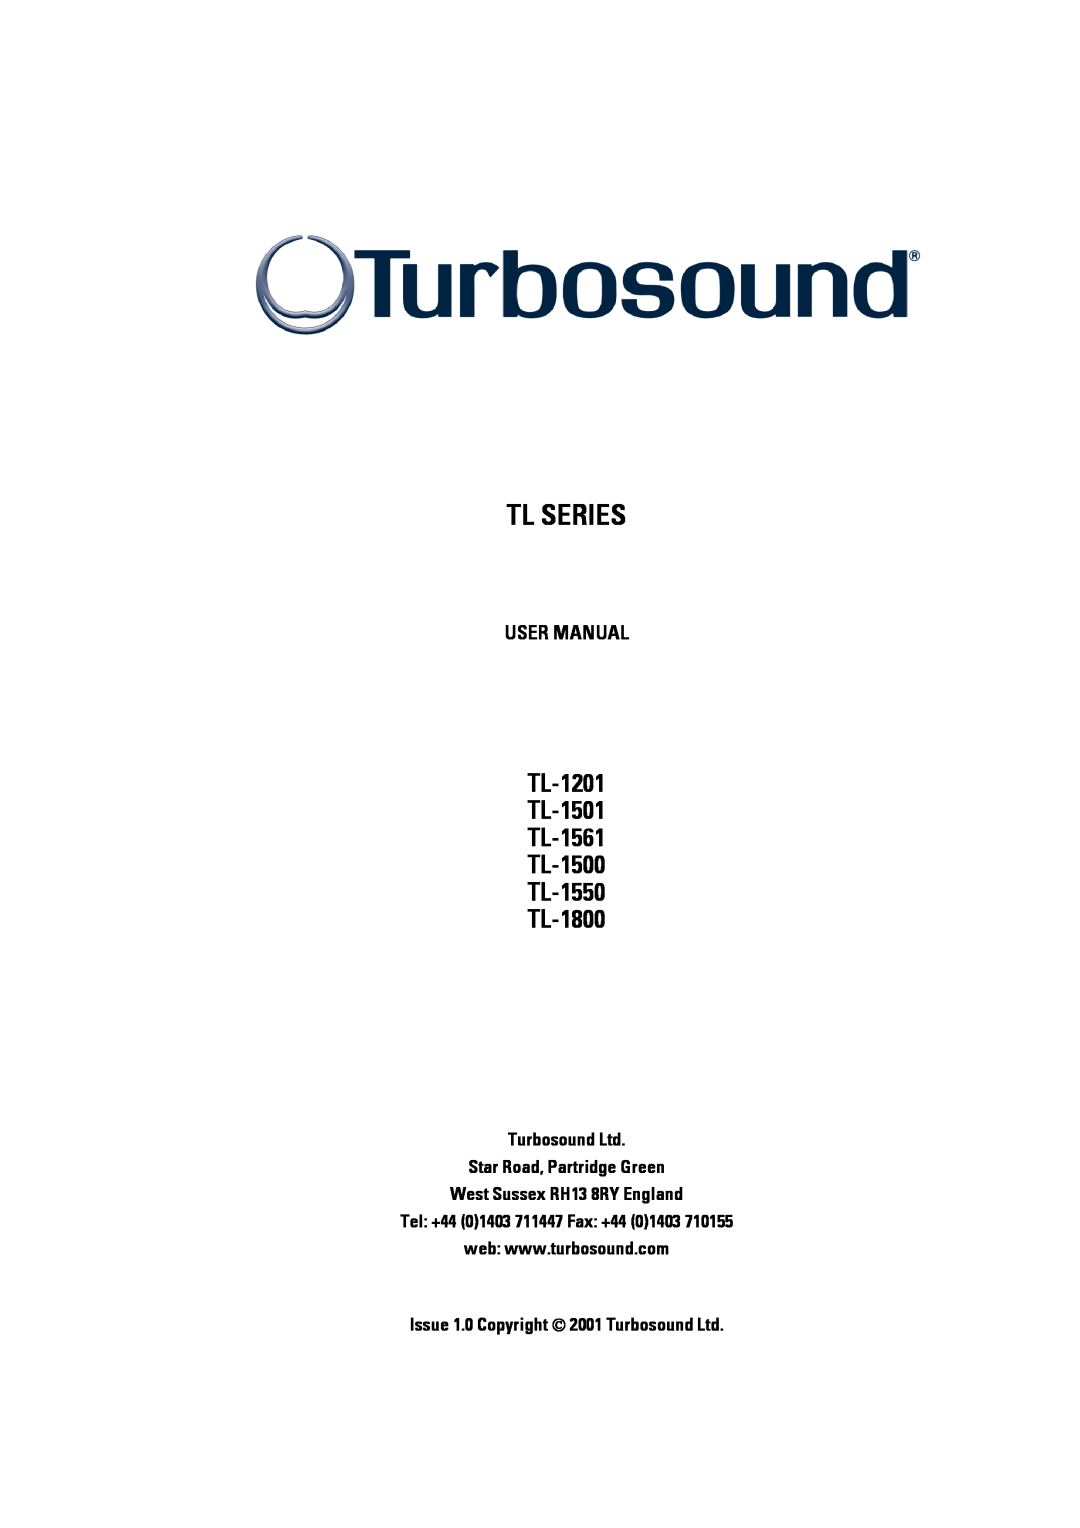 Turbosound TL-1800 user manual Star Road, Partridge Green West Sussex RH13 8RY England, Tel +44 01403 711447 Fax +44 01403 